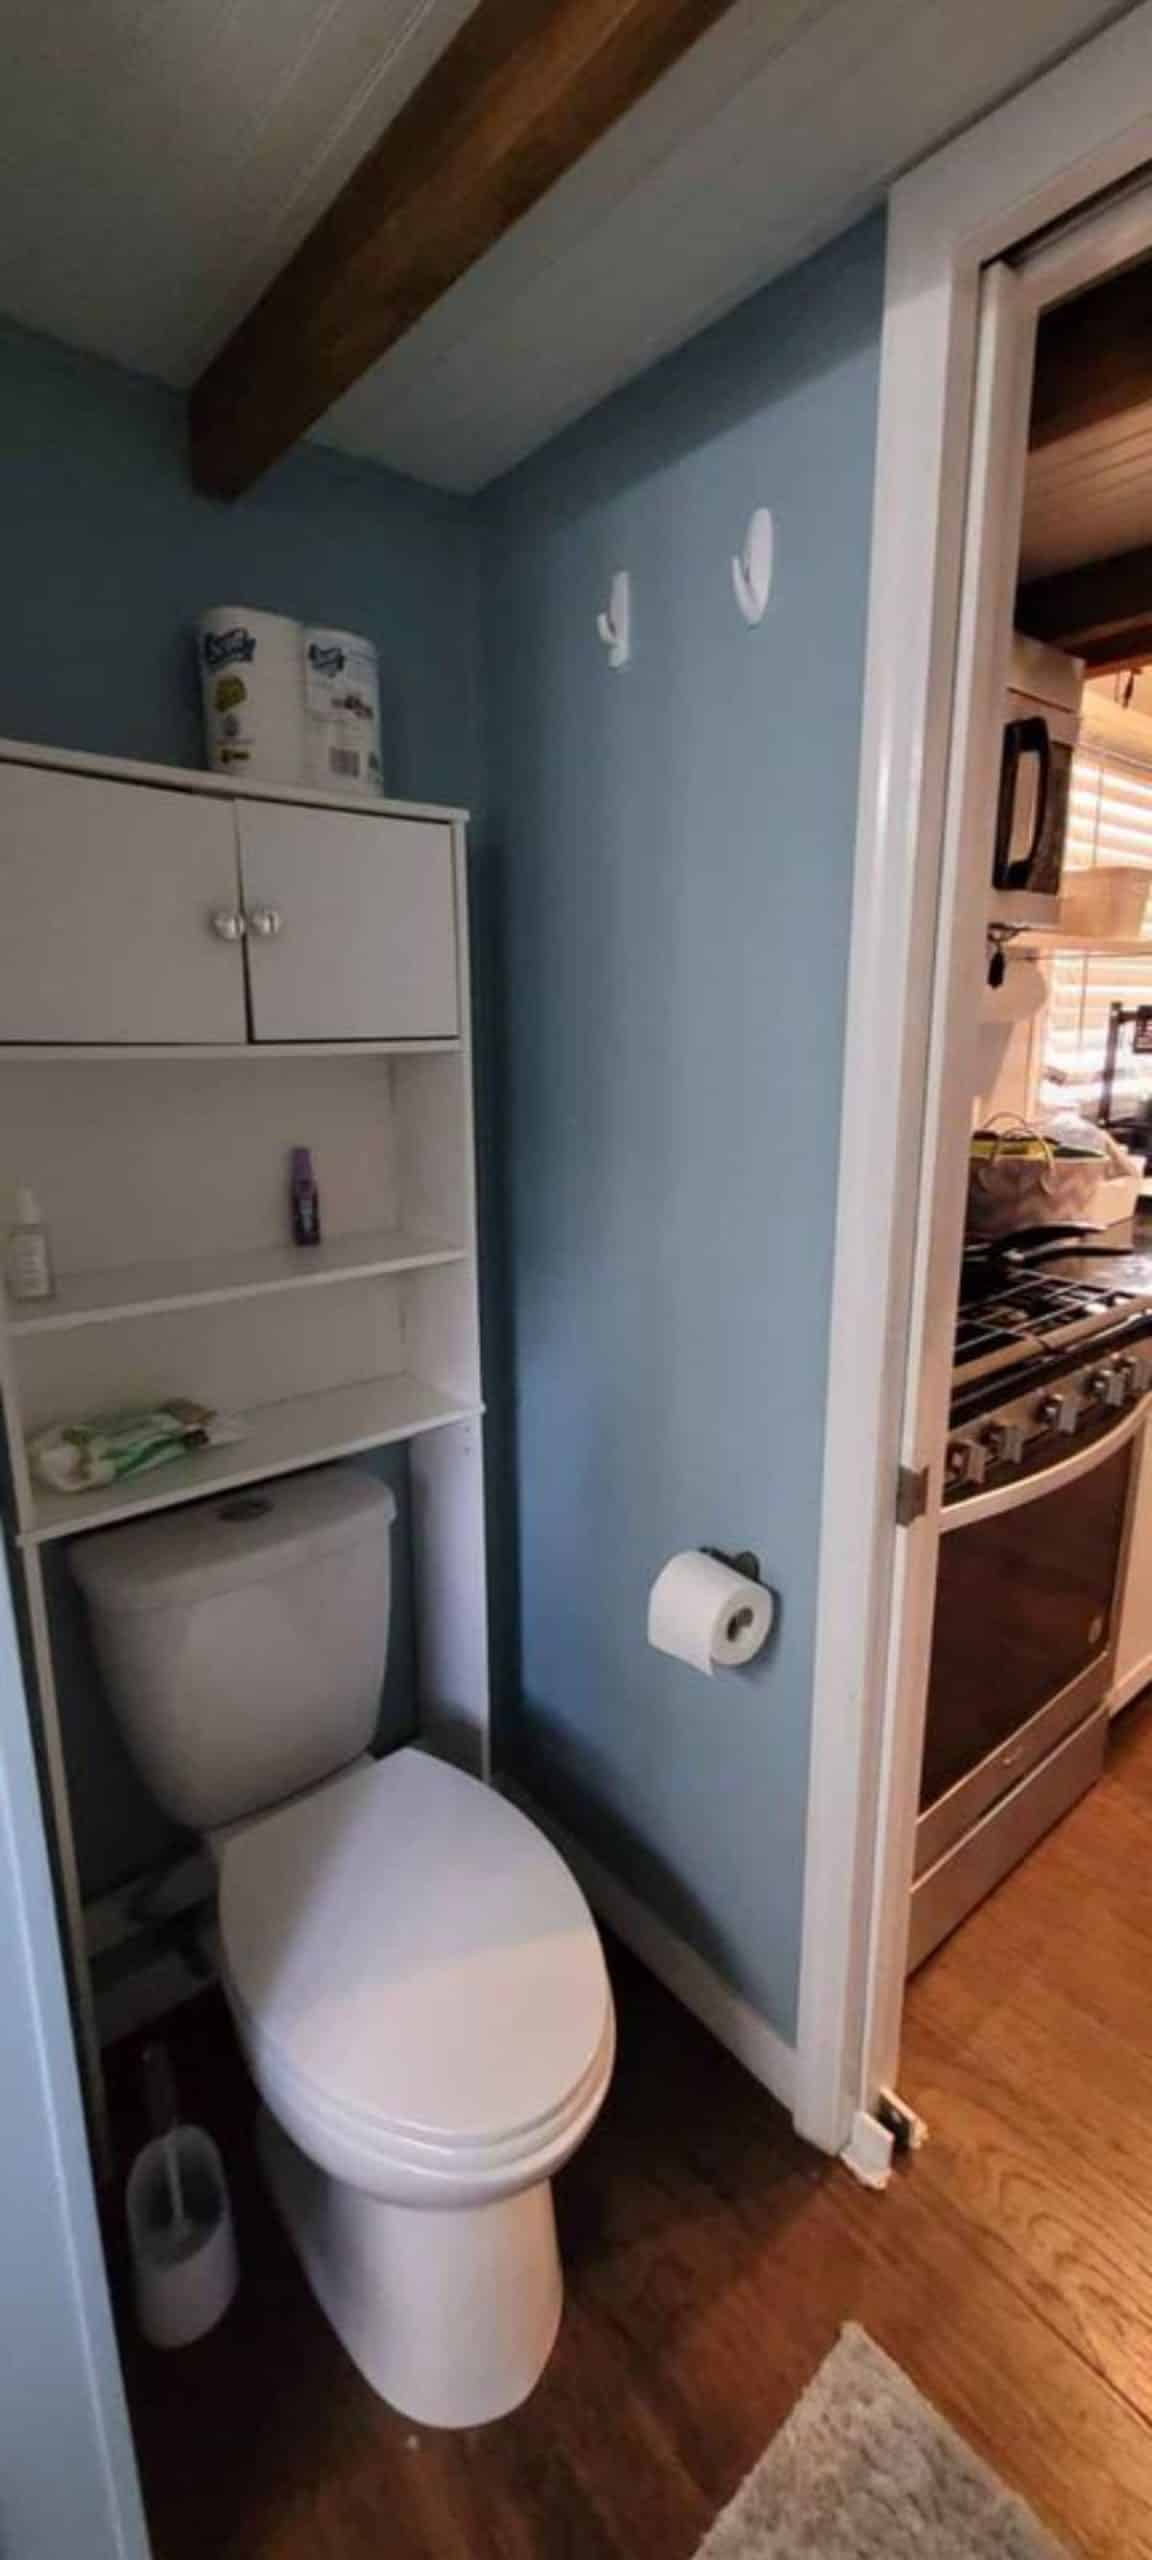 standard toilet in bathroom of 24' one bedroom tiny house